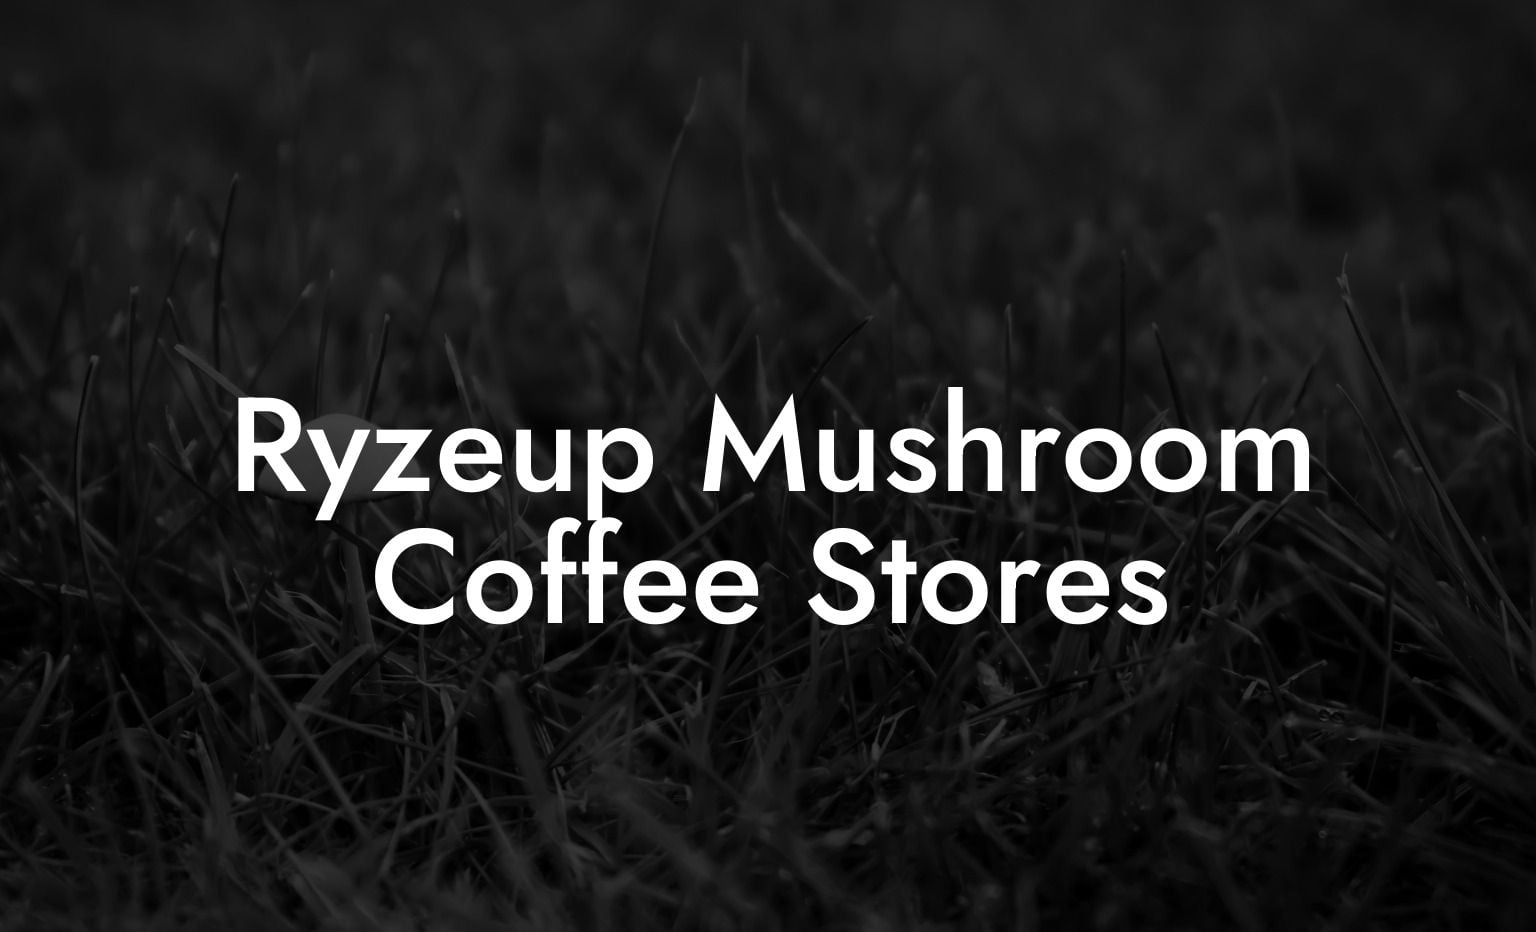 Ryzeup Mushroom Coffee Stores